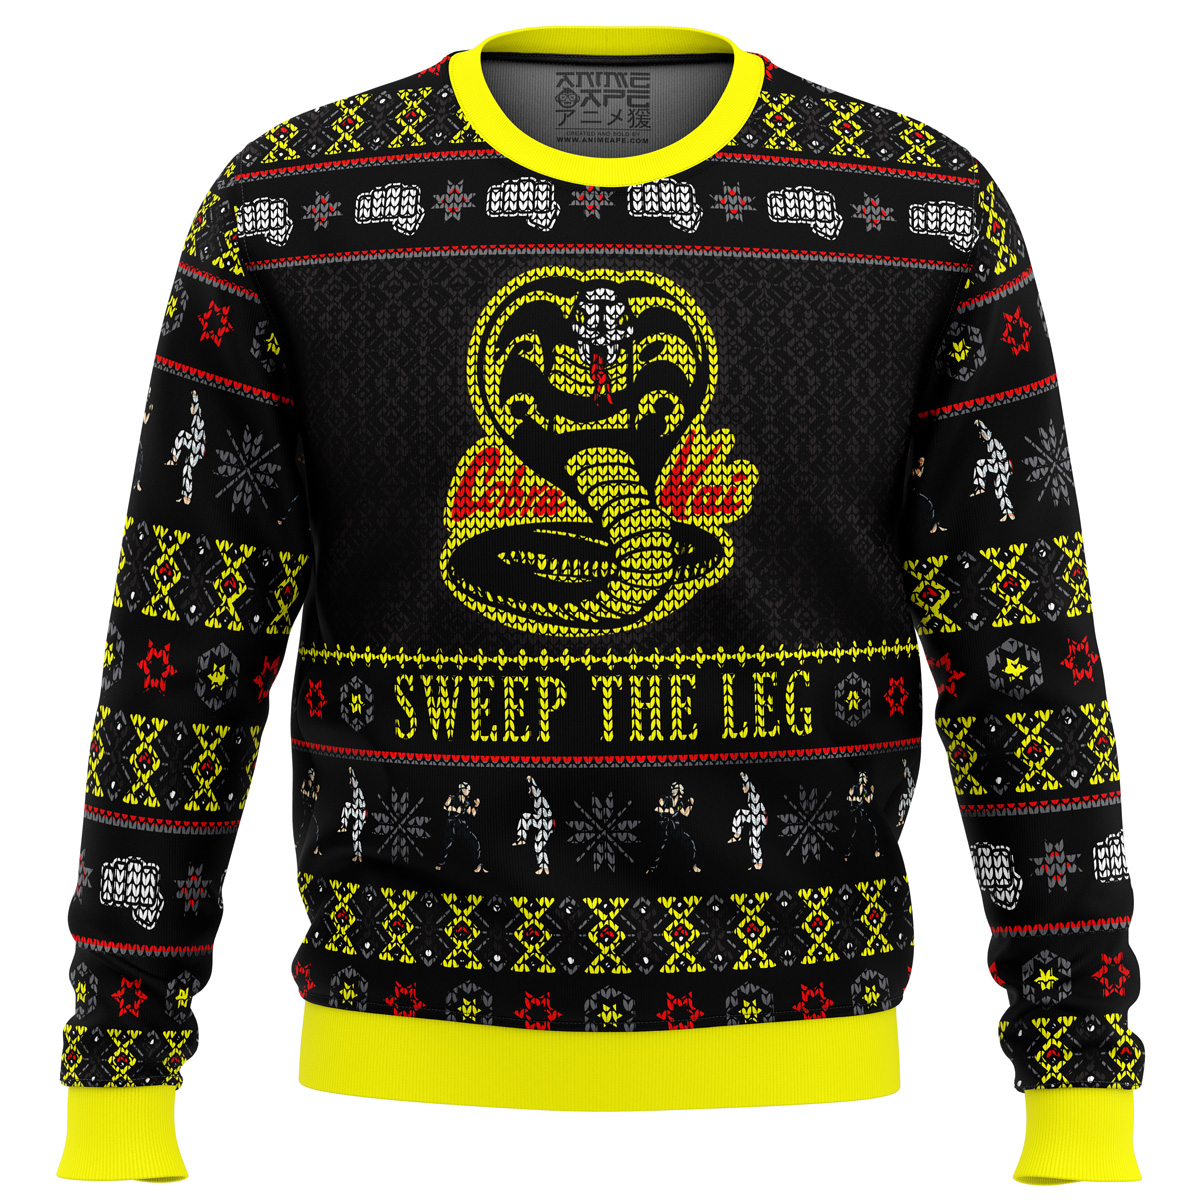 cobra kai sweep the leg karate kid ugly christmas sweater ana2207 6052 - Fandomaniax Store